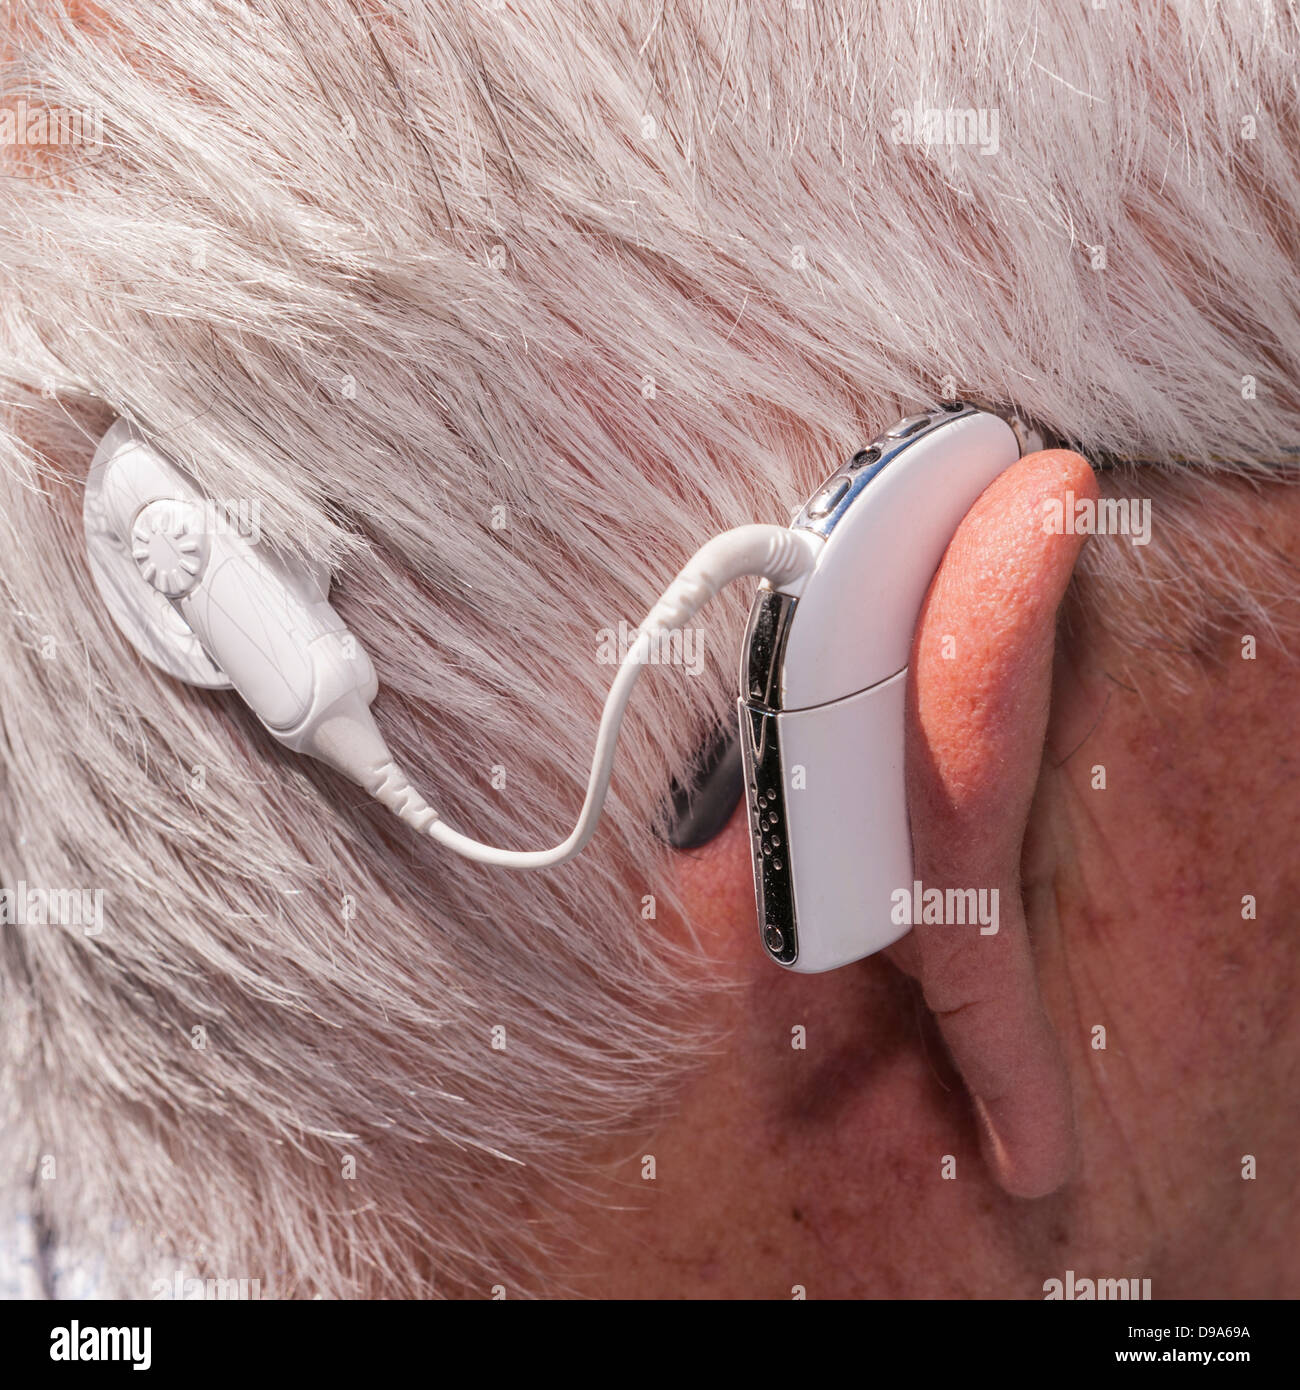 Audífono de implante coclear fotografías e imágenes de alta resolución -  Alamy